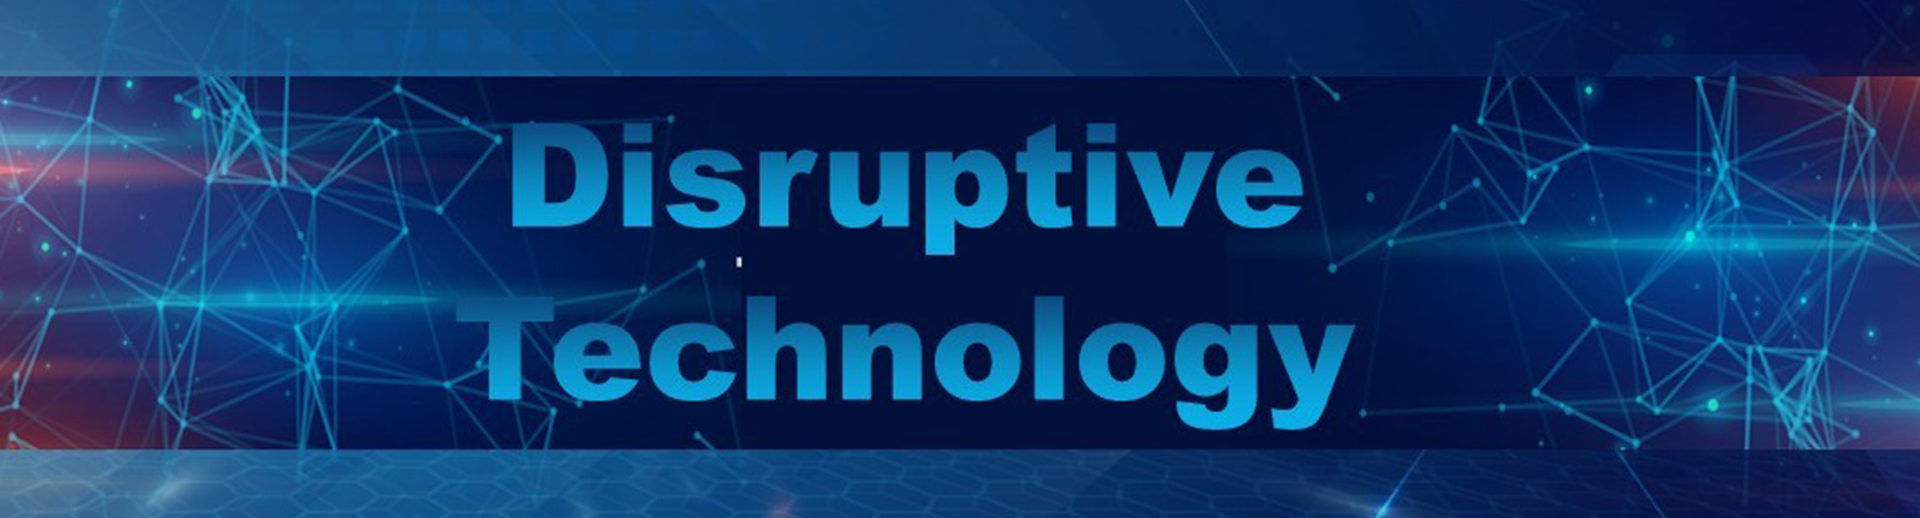 Disruptive Technology Banner